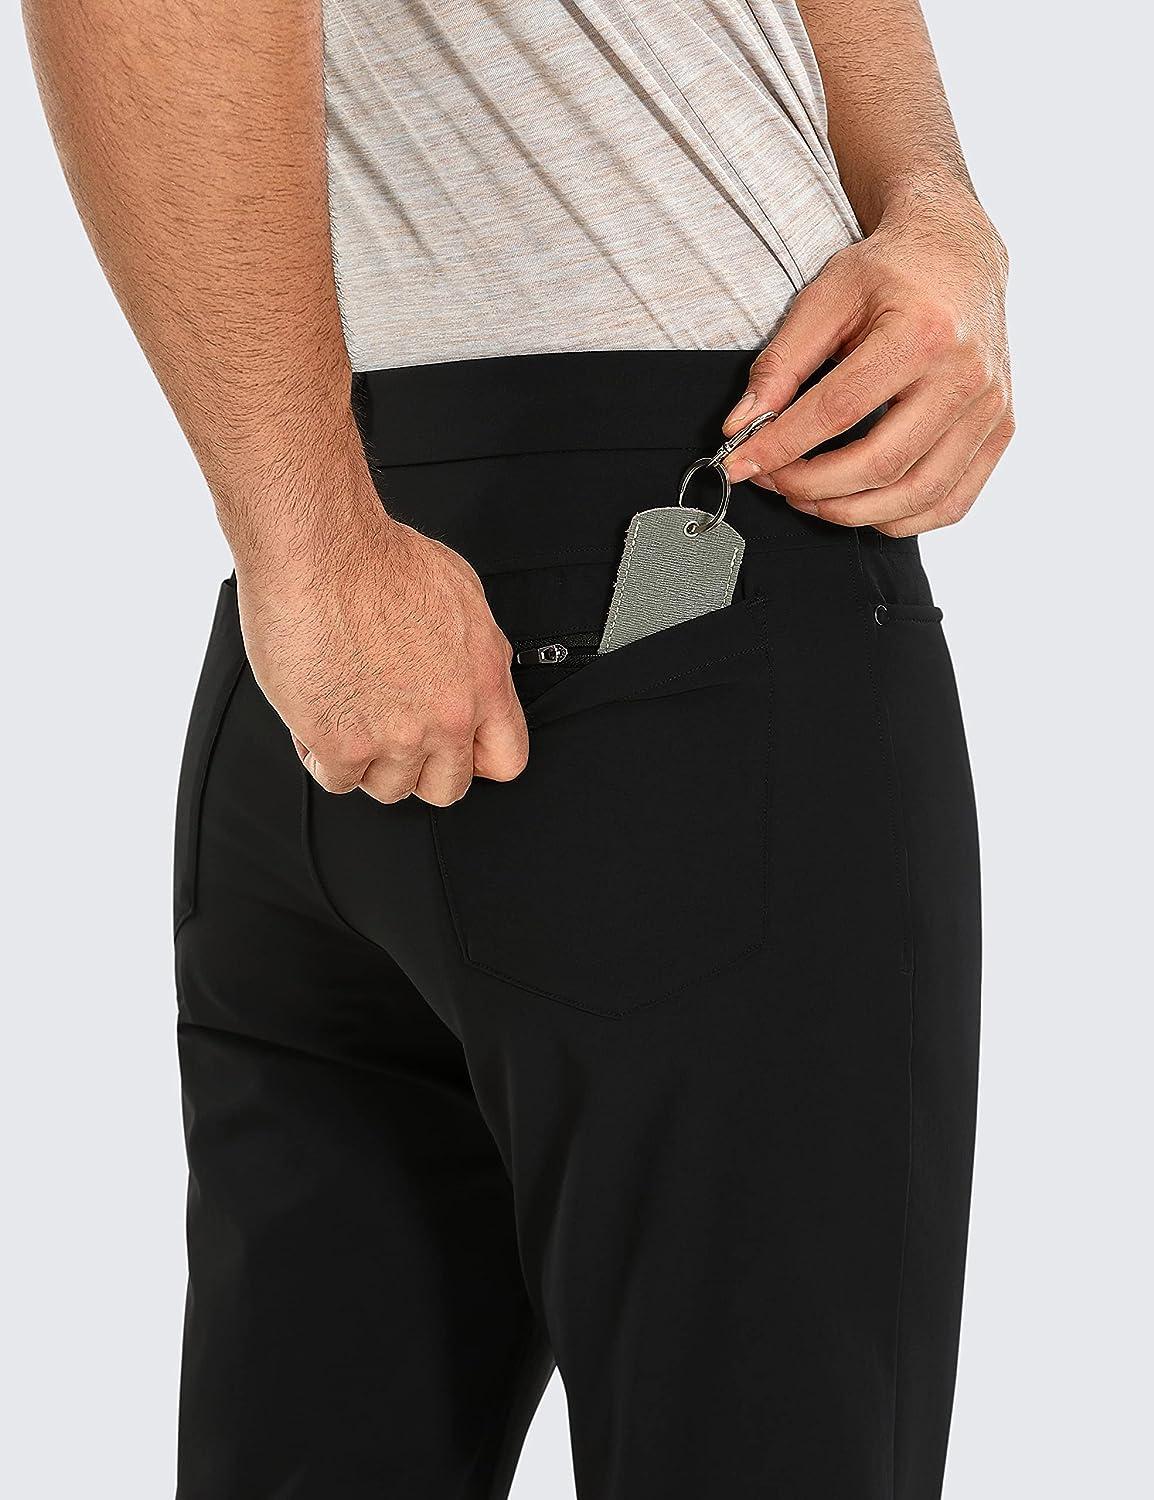 CRZ YOGA Men's Stretch Golf Pants - 33/35'' Slim Fit Work Pants Stretch  Waterproof 5-Pocket Thick Travel Pants